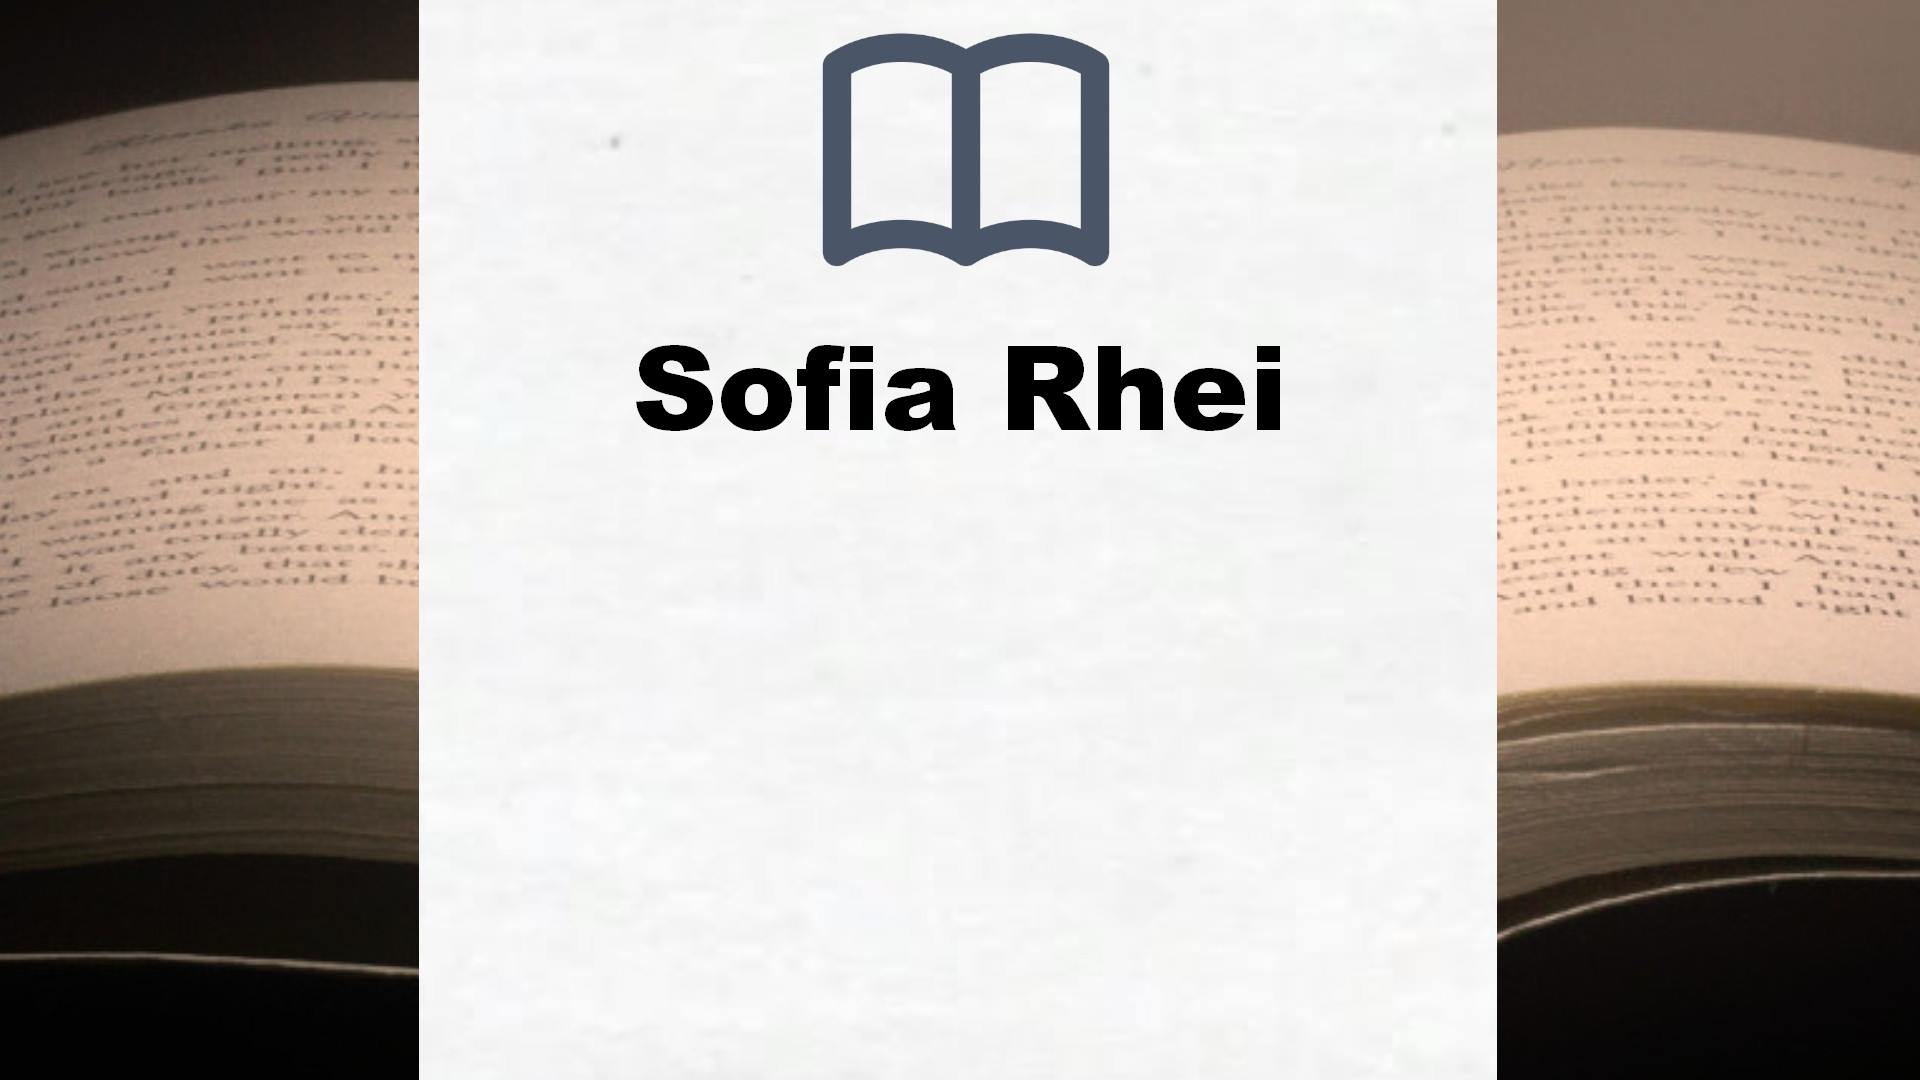 Libros Sofia Rhei